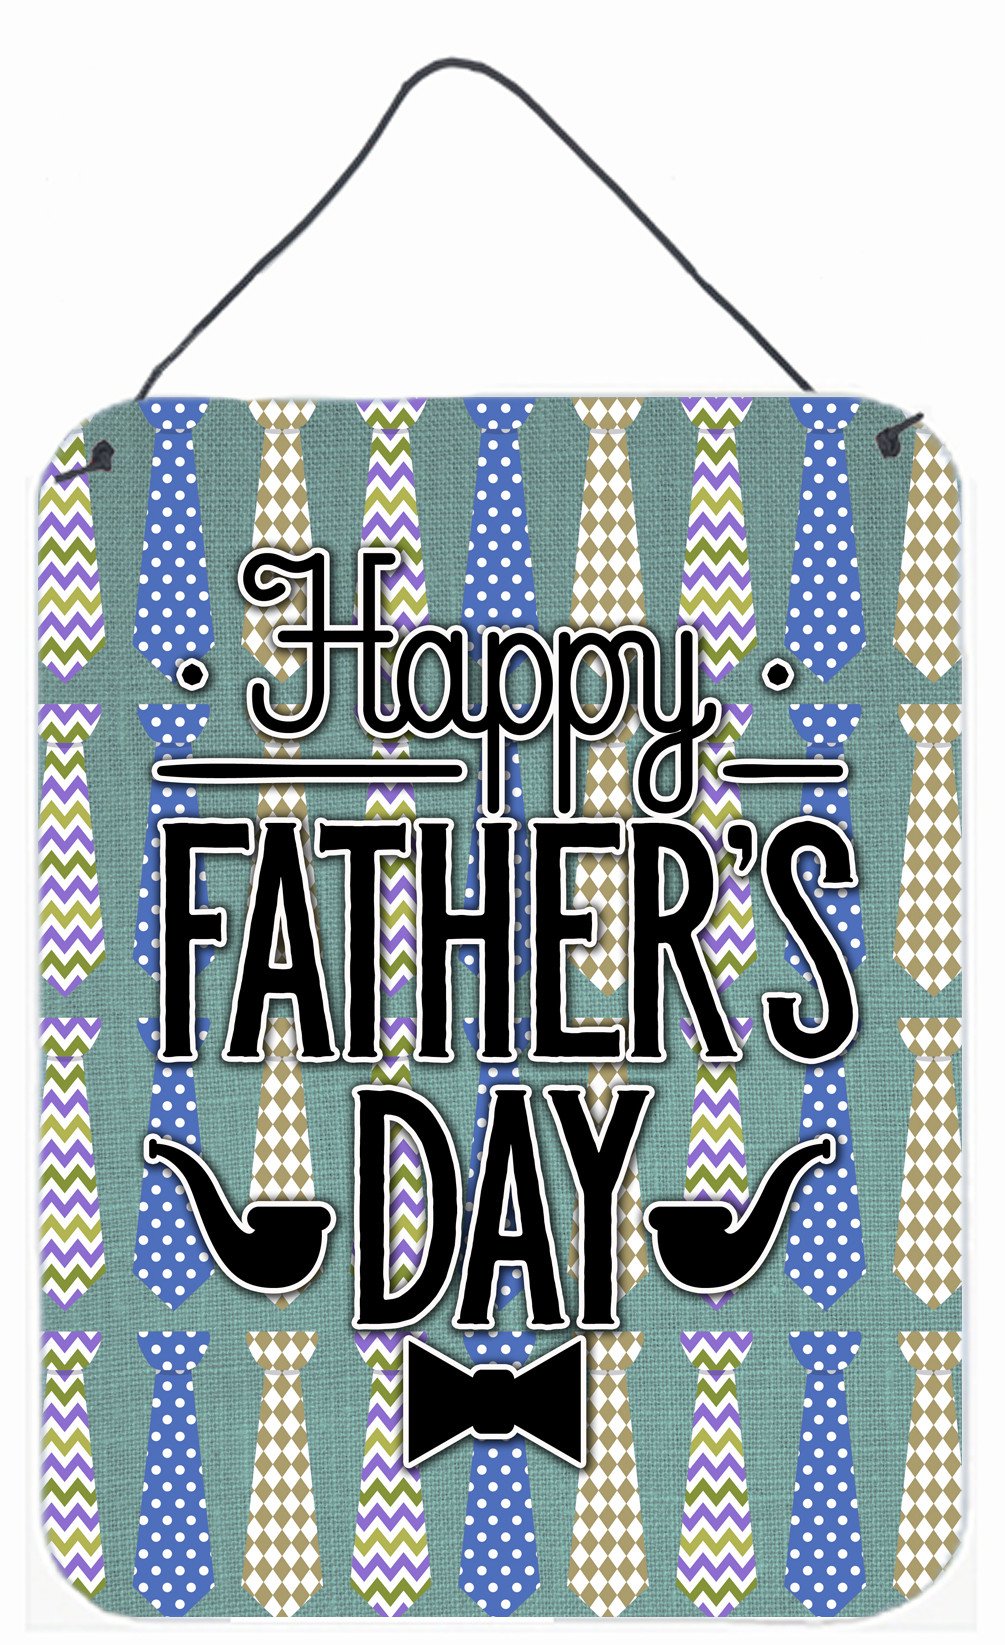 Happy Father's Day Neckties Wall or Door Hanging Prints BB5437DS1216 by Caroline's Treasures